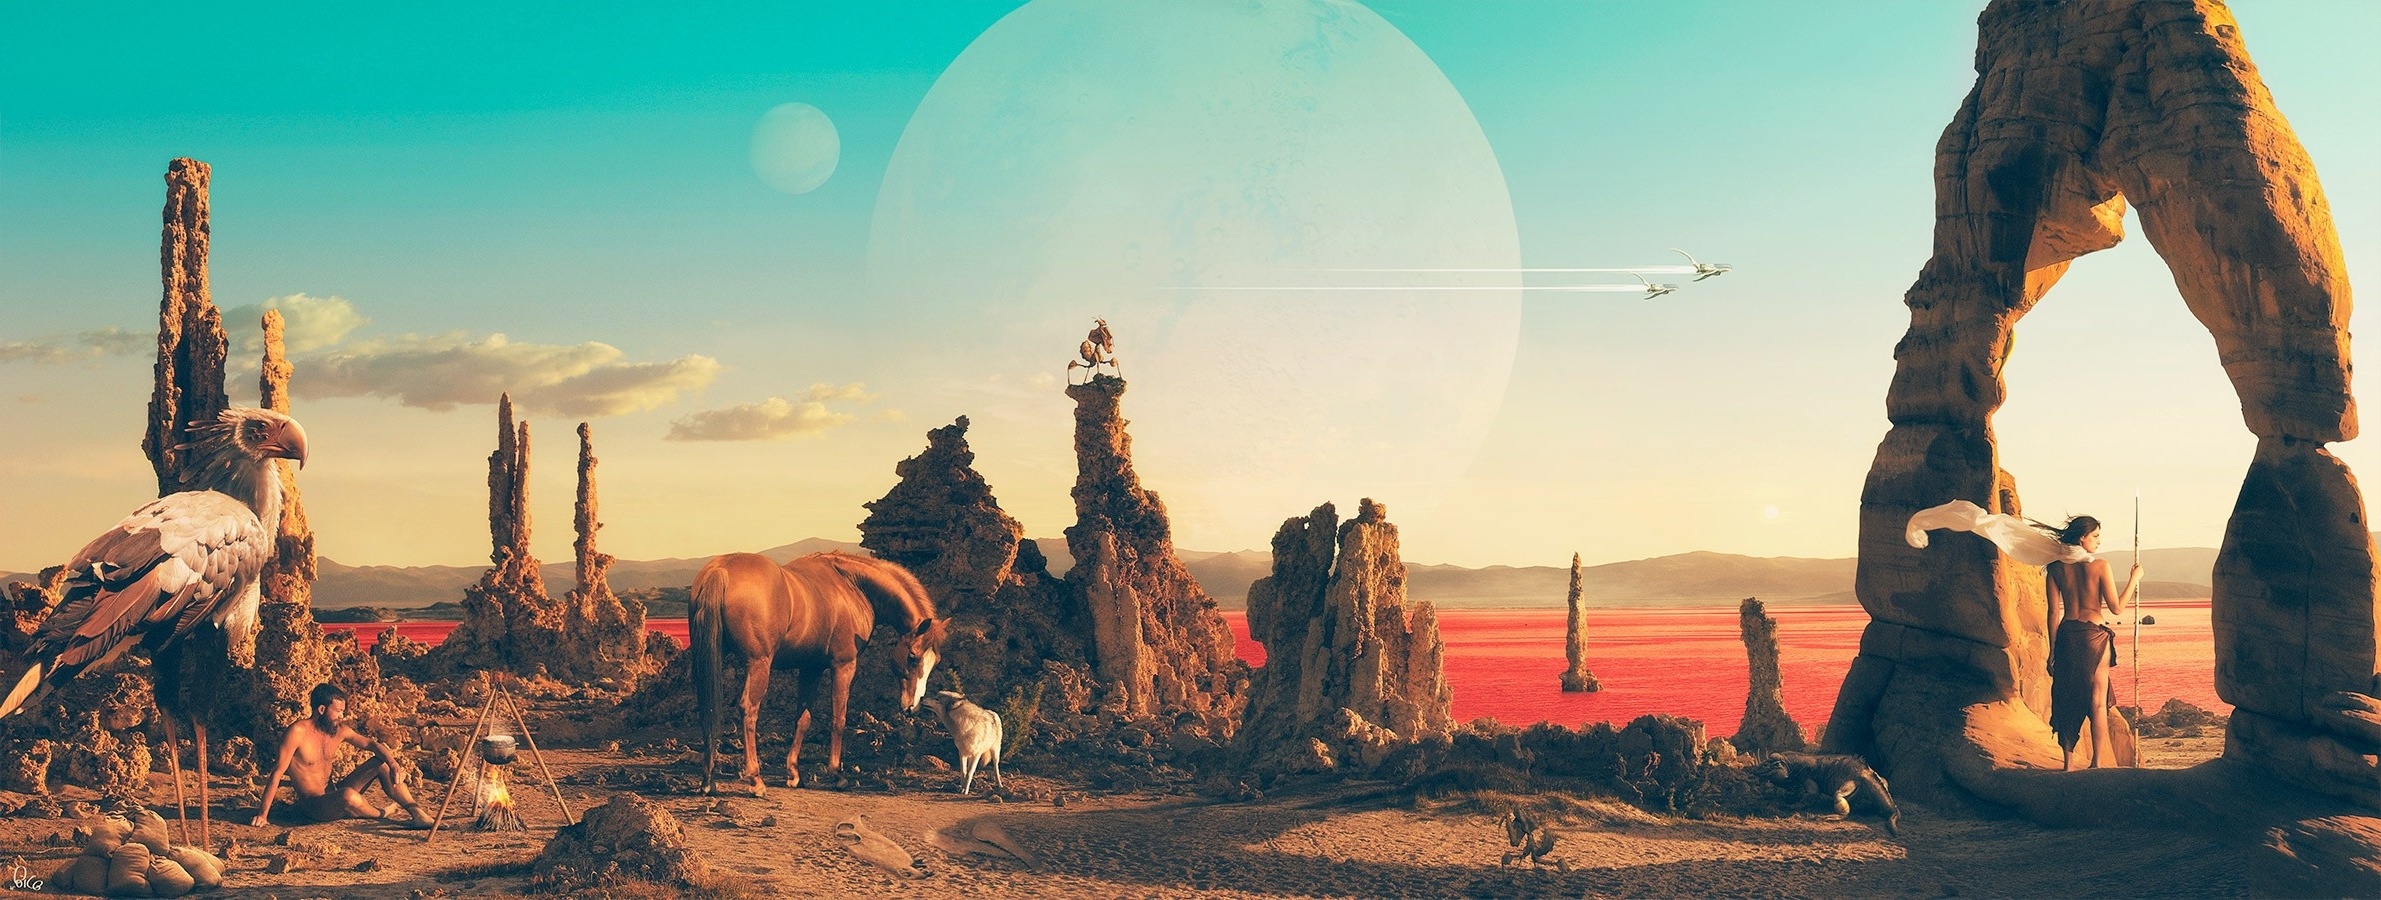 Wallpaper New Planet, Desert, Sci-Fi, Animals - Resolution:2381x900 ...